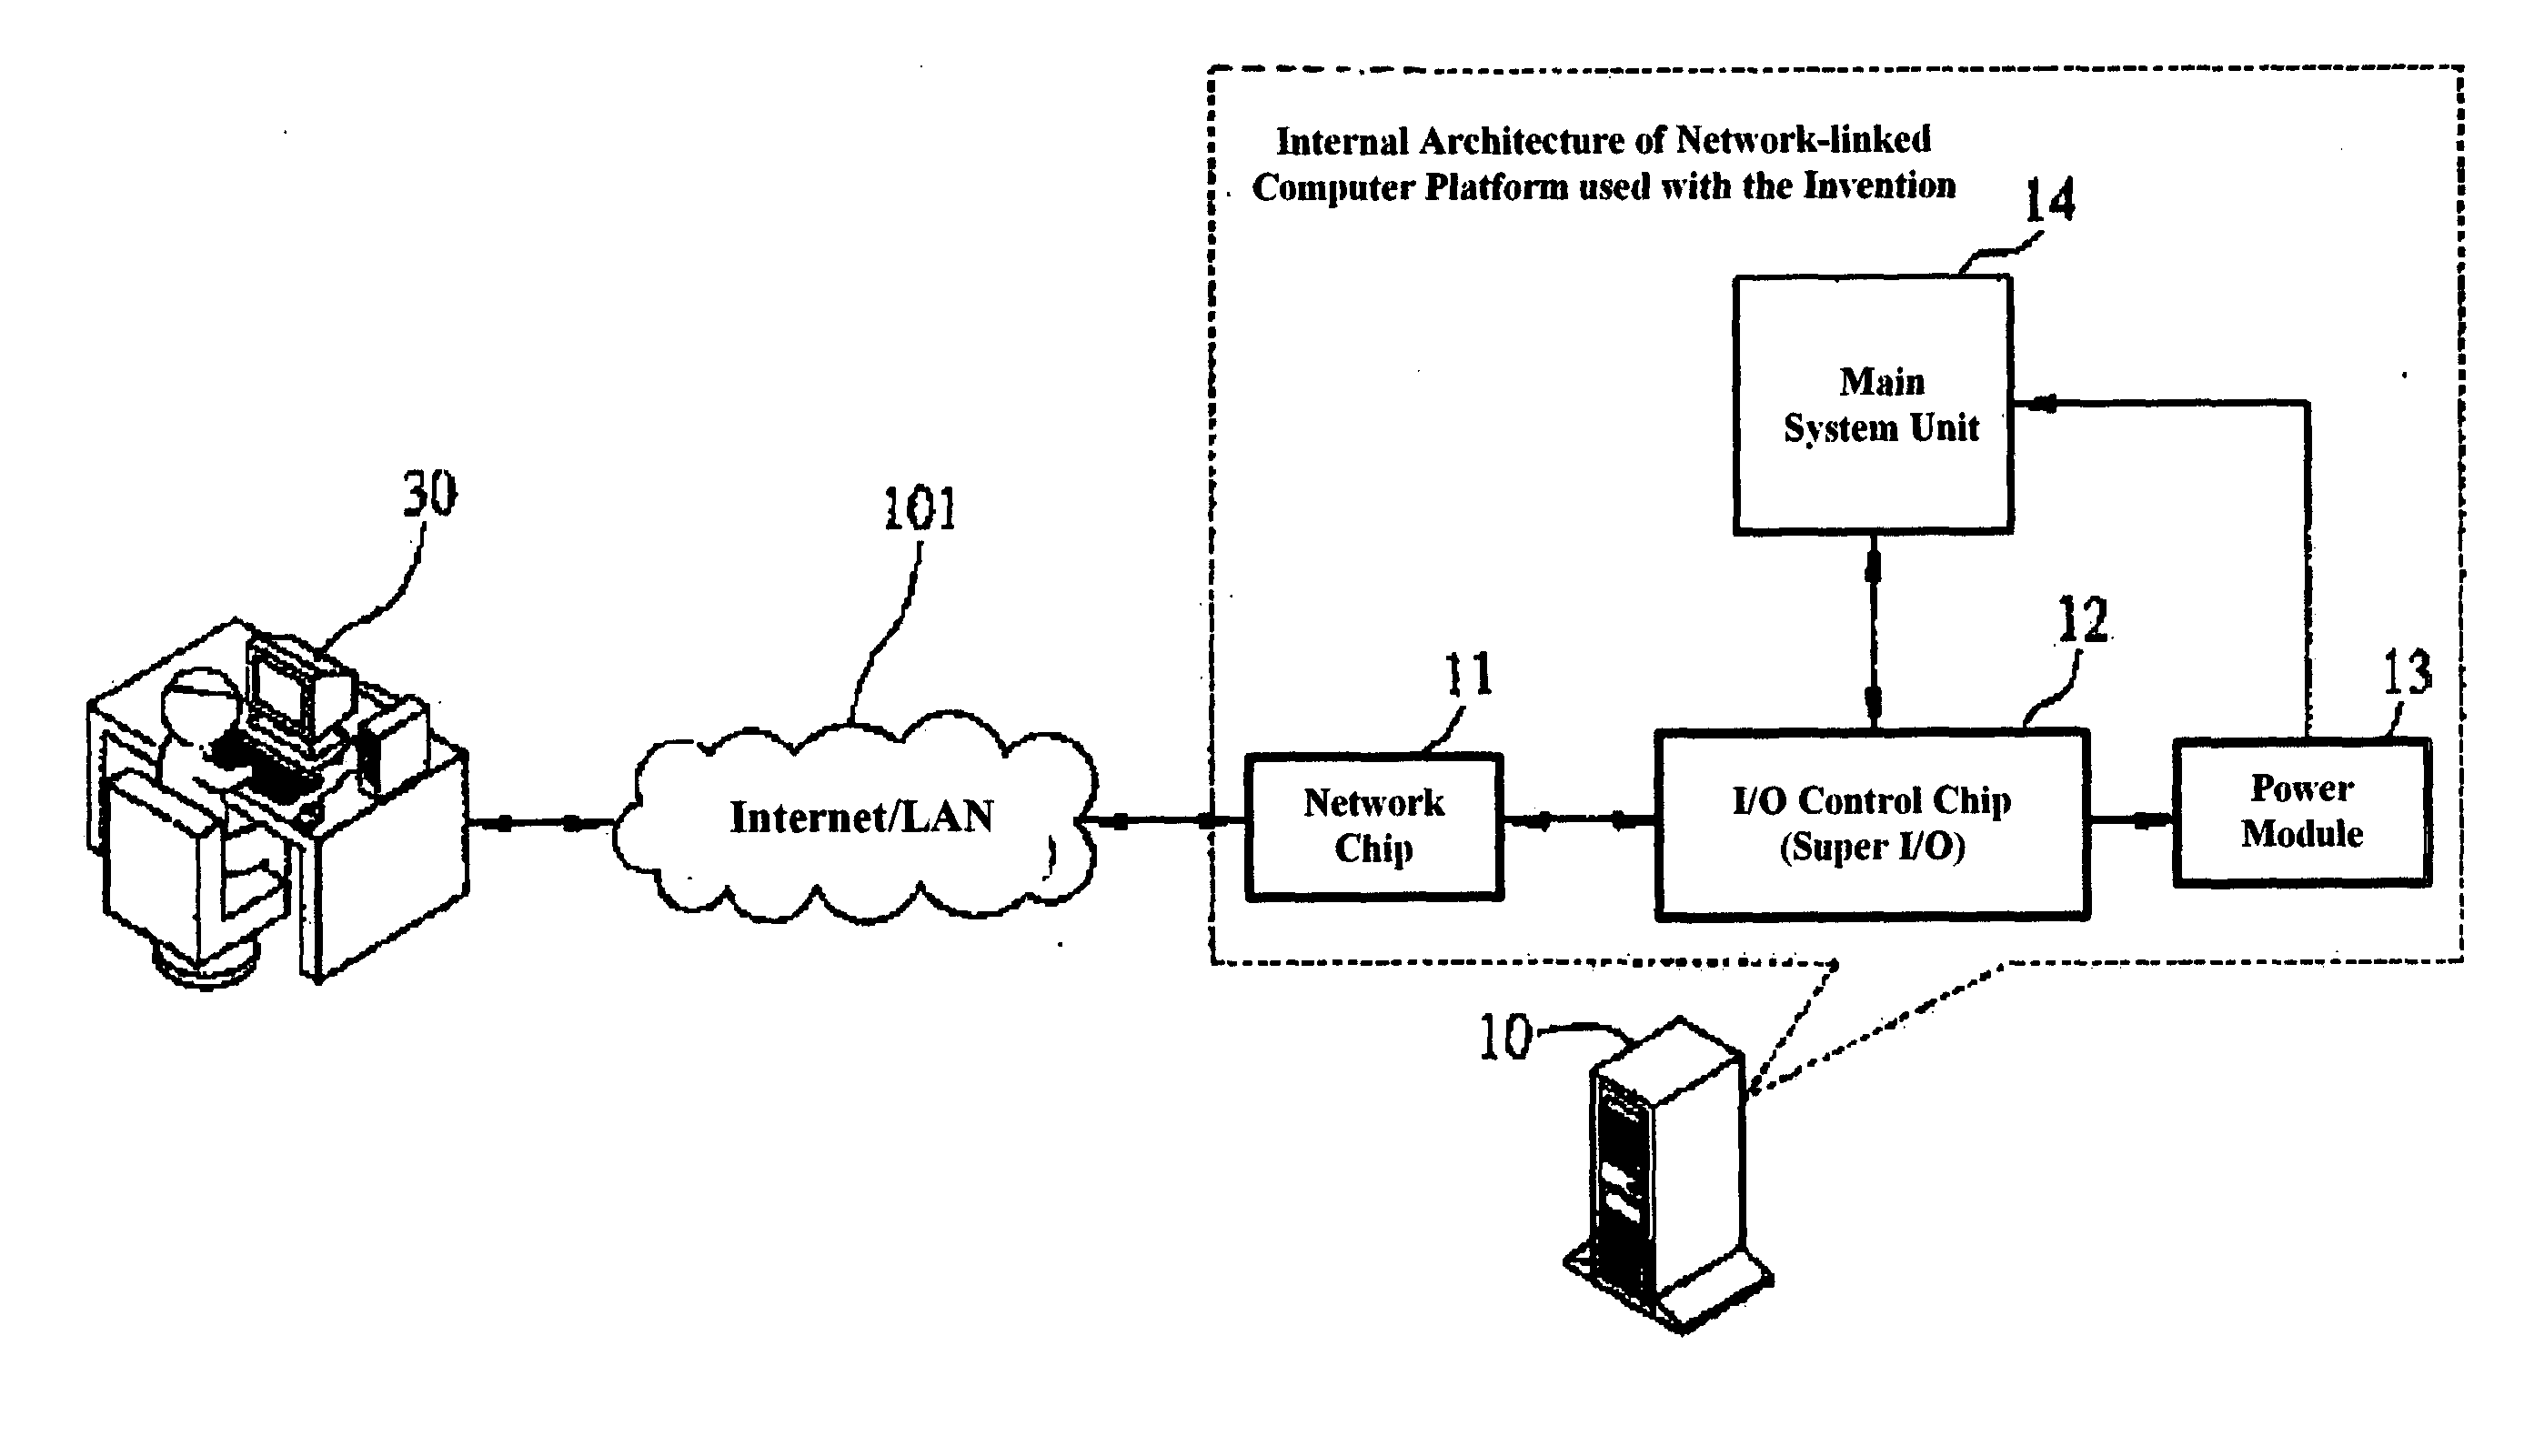 Remote reboot method and system for network-linked computer platform